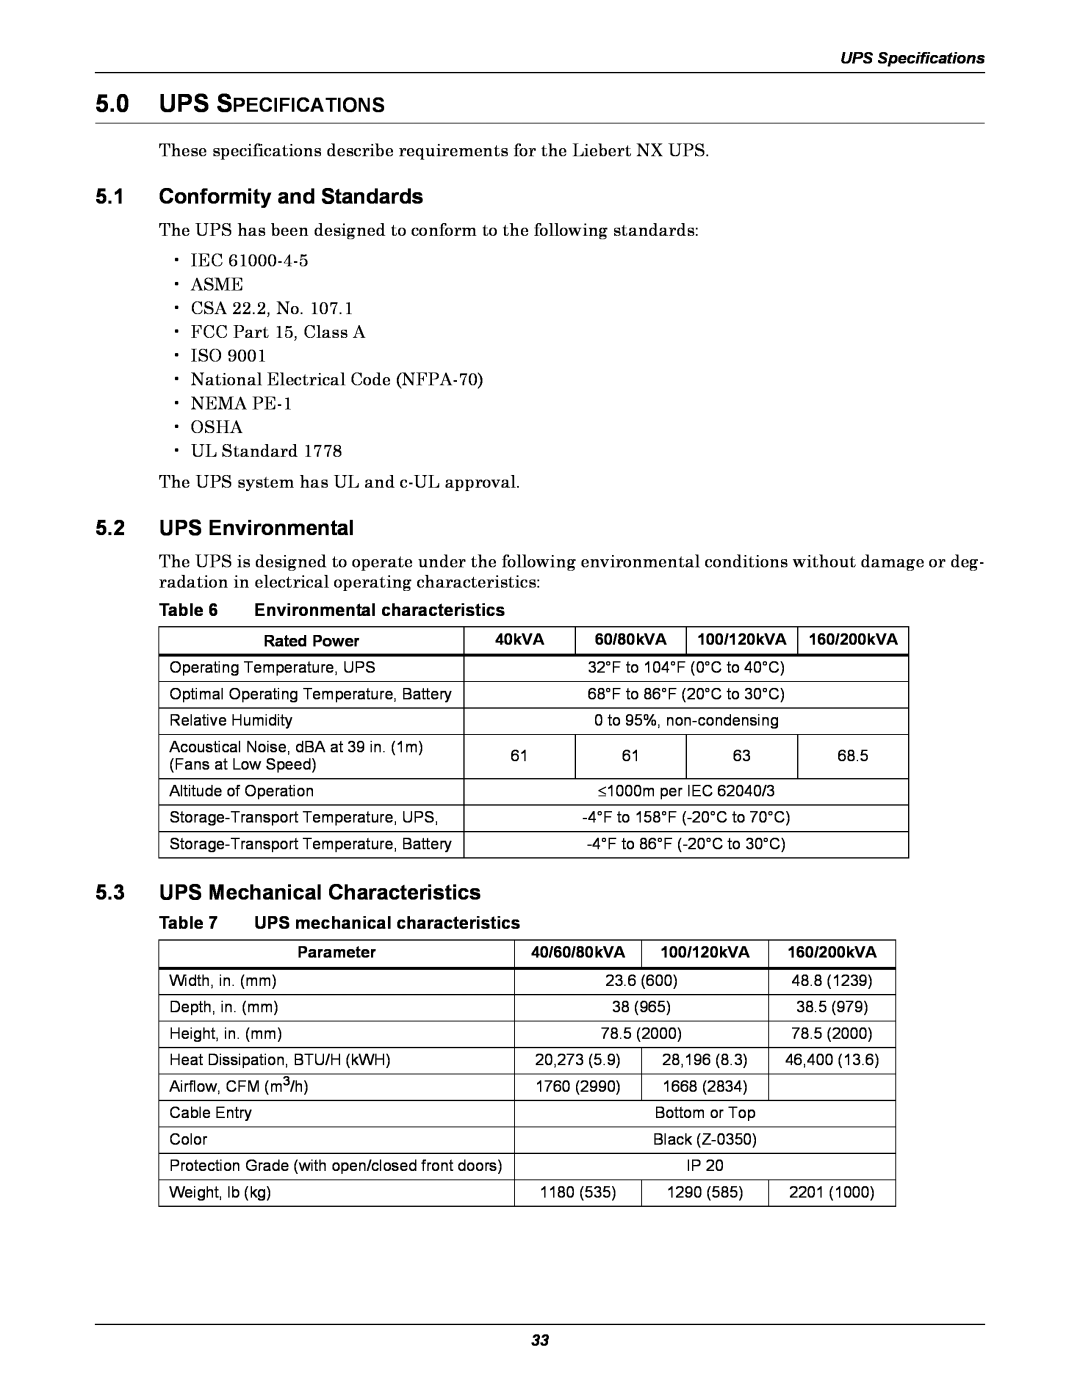 Emerson 480V, 60HZ user manual 5.0UPS SPECIFICATIONS, Table, Environmental characteristics, UPS mechanical characteristics 